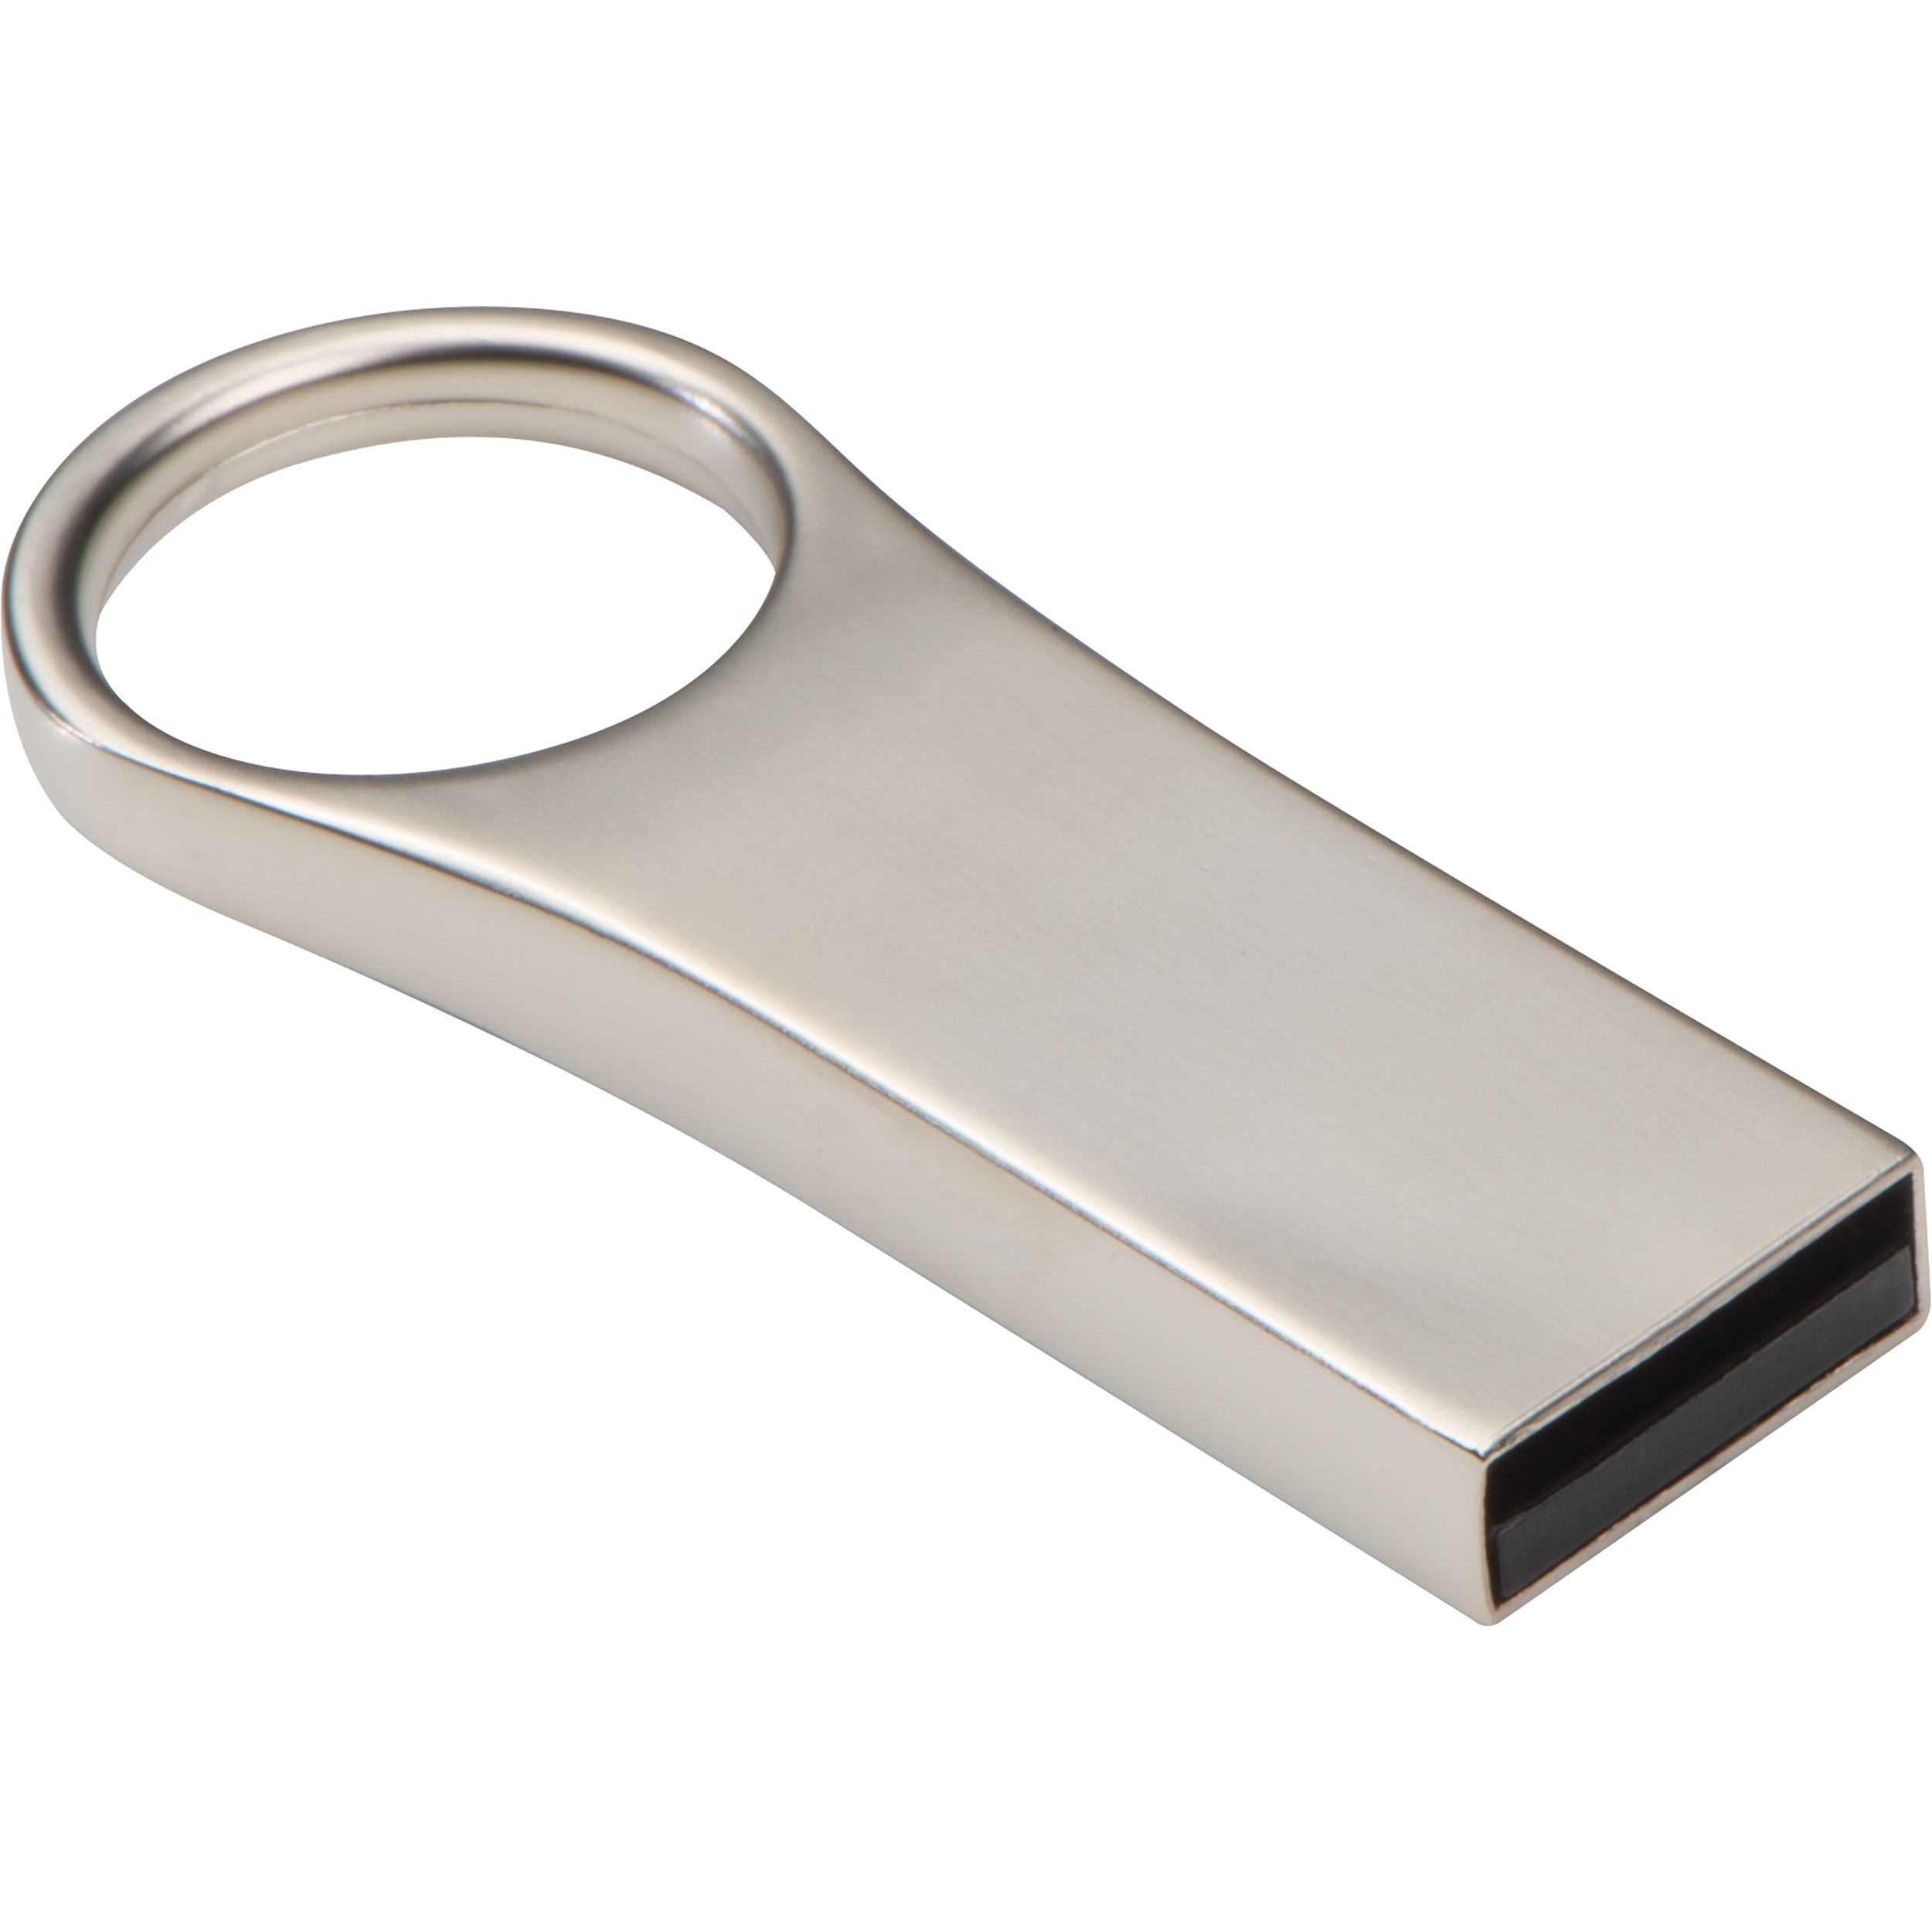 USB Stick aus Metall 4GB, silbergrau